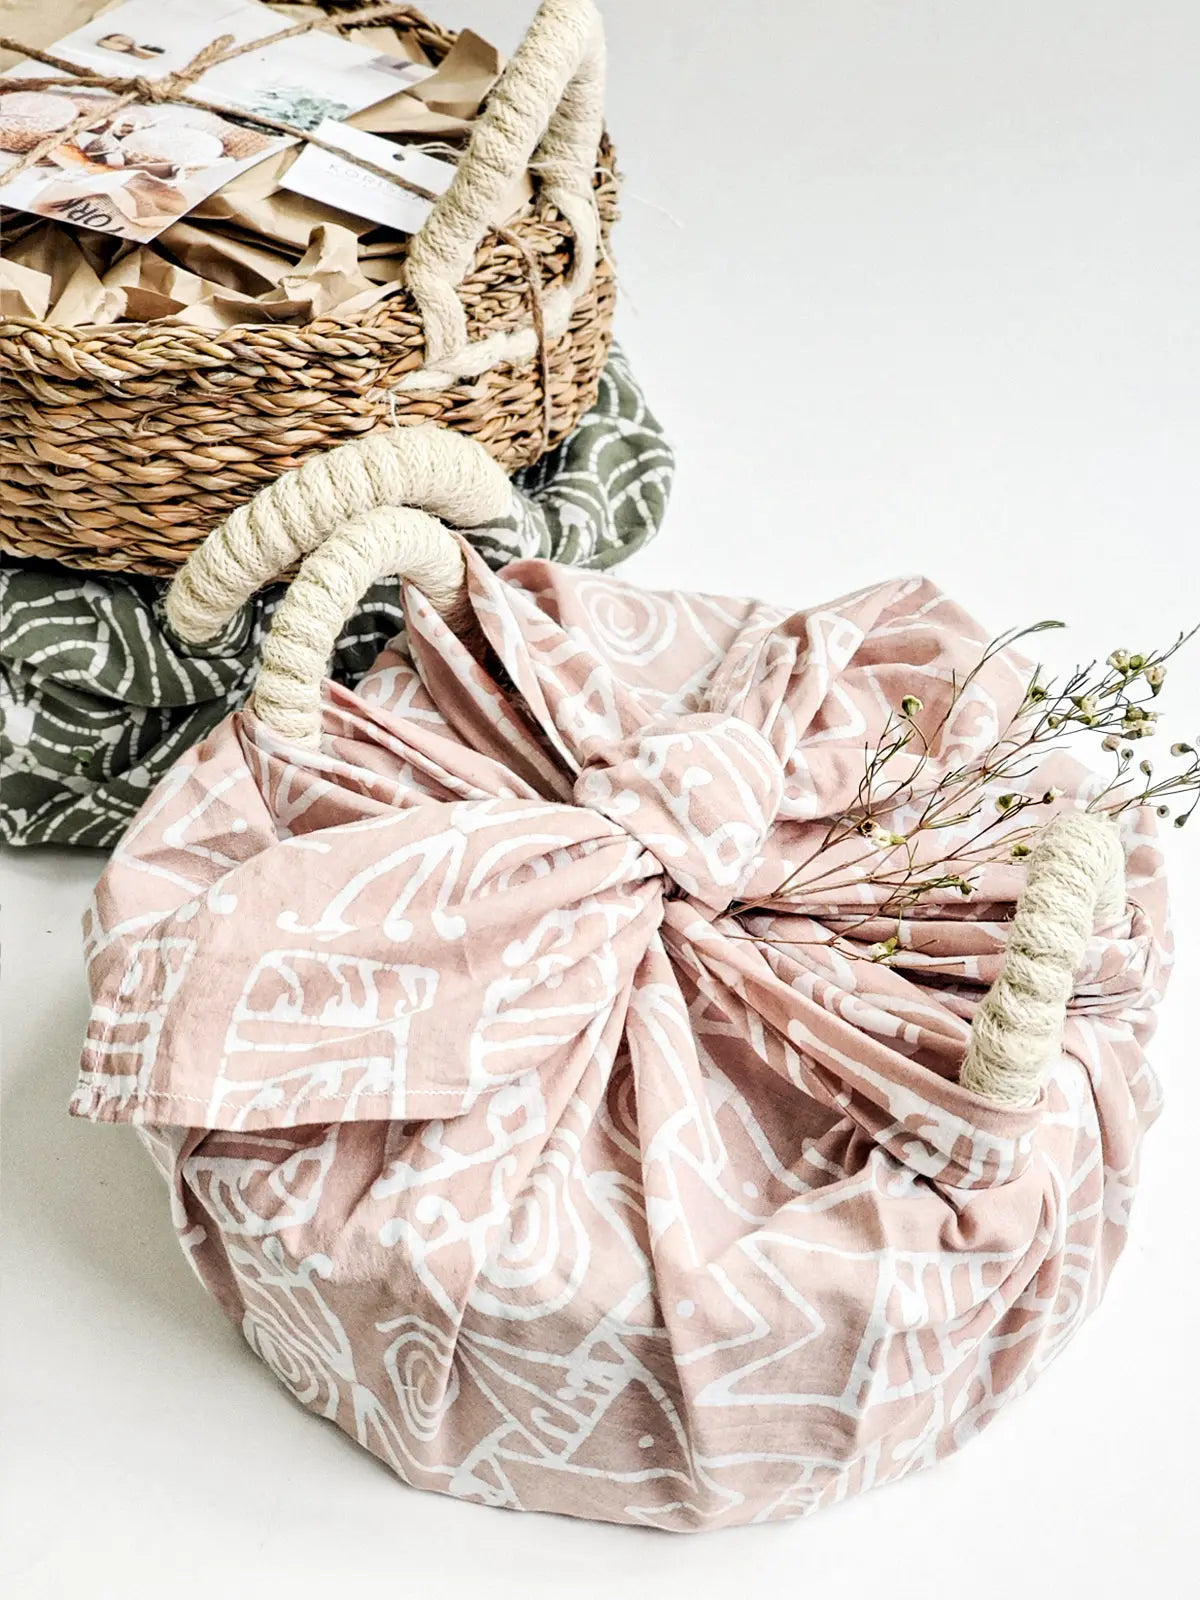 Bread Warmer & Basket Gift Set with Tea Towel - Owl Round KORISSA